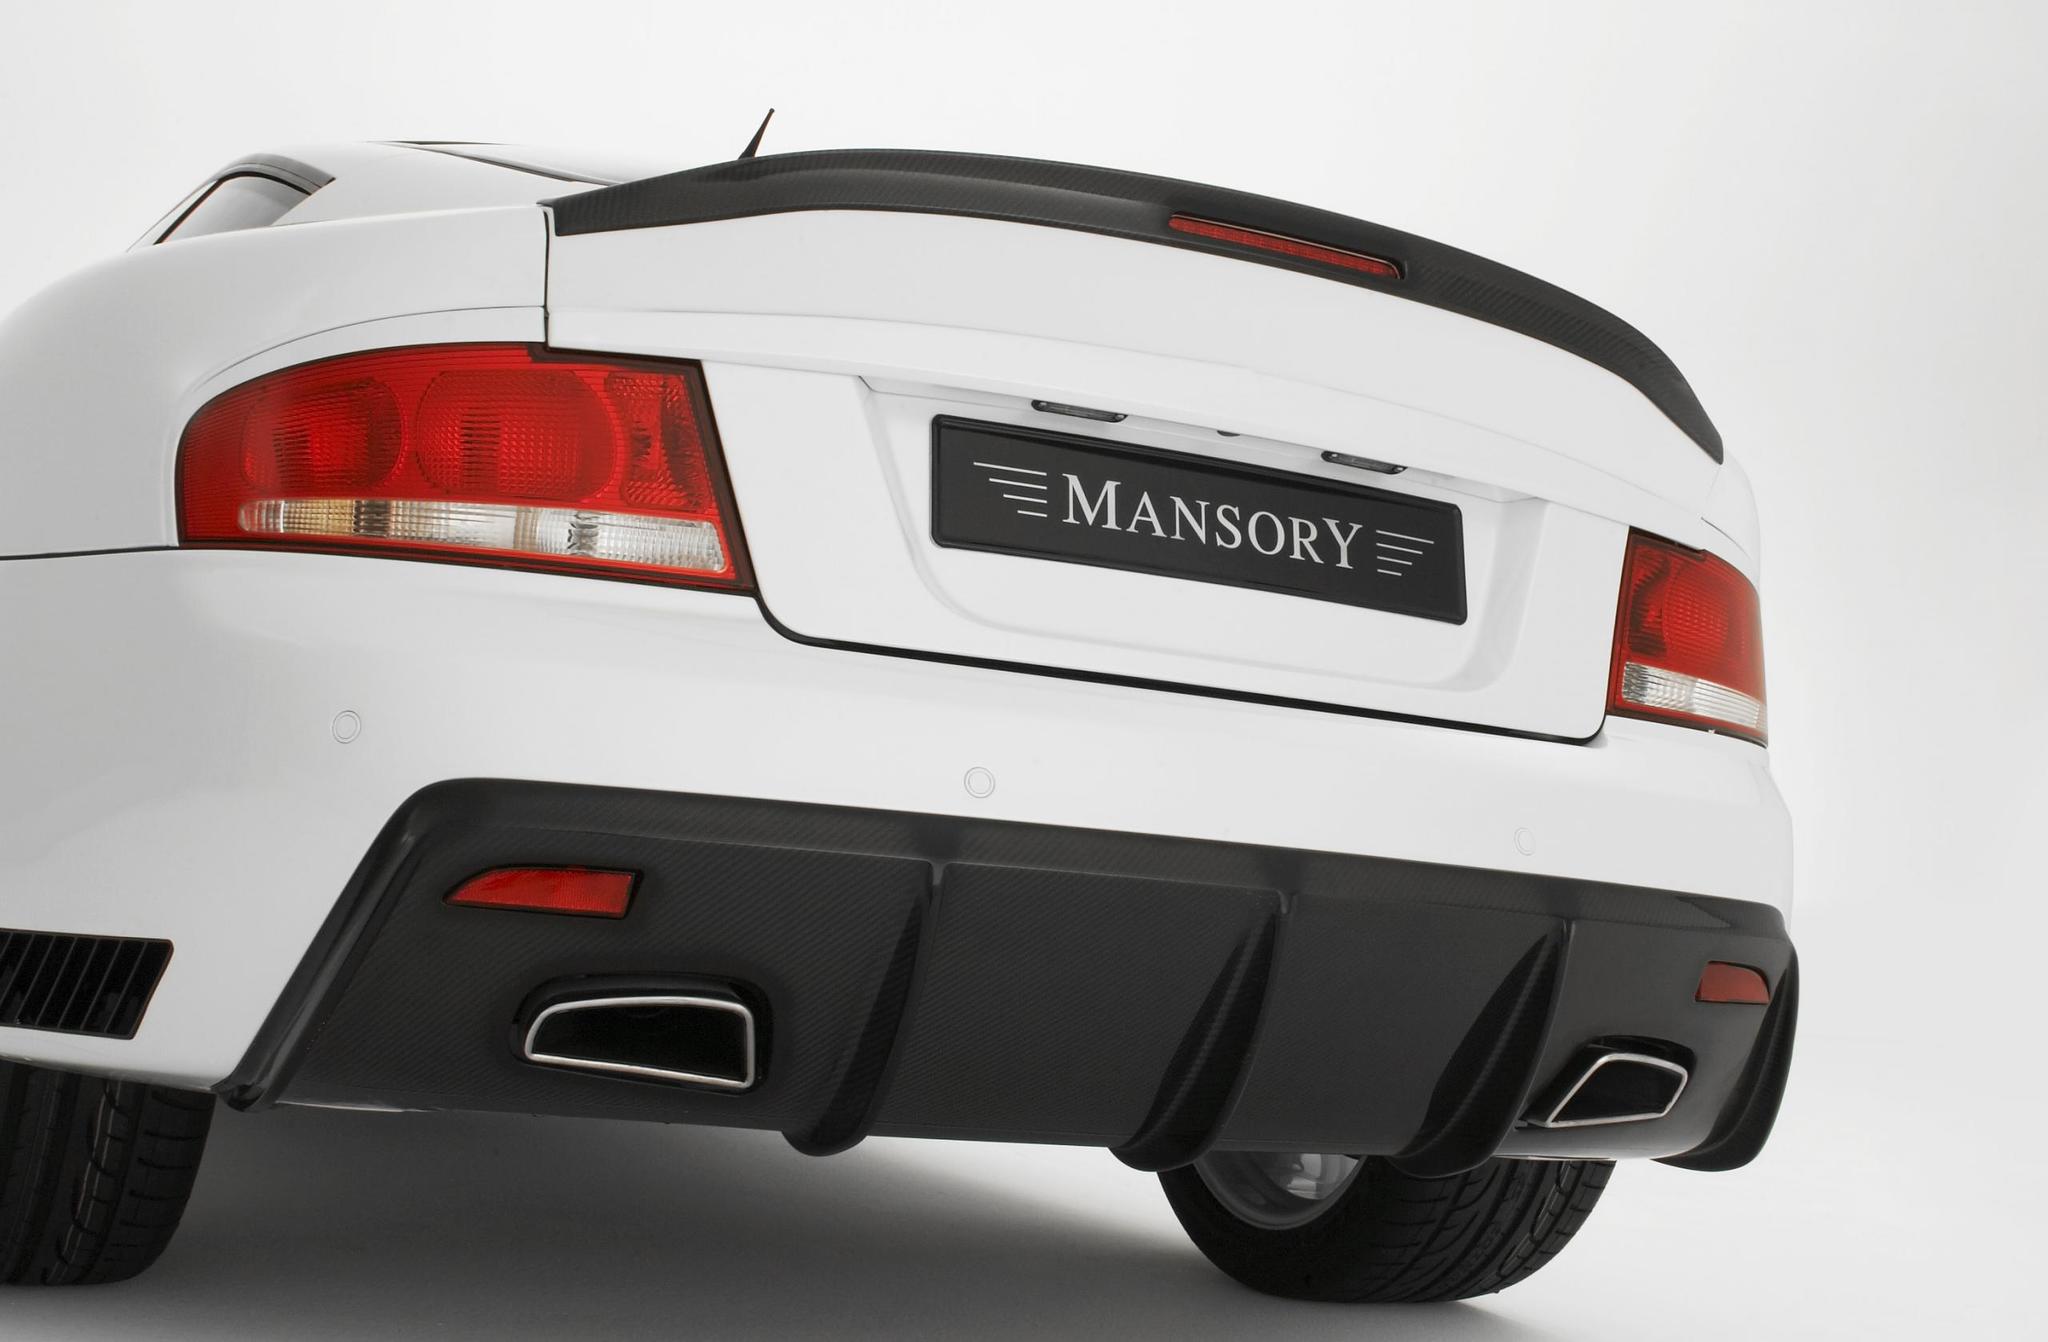 Mansory body kit for Aston Martin Vanquish new model